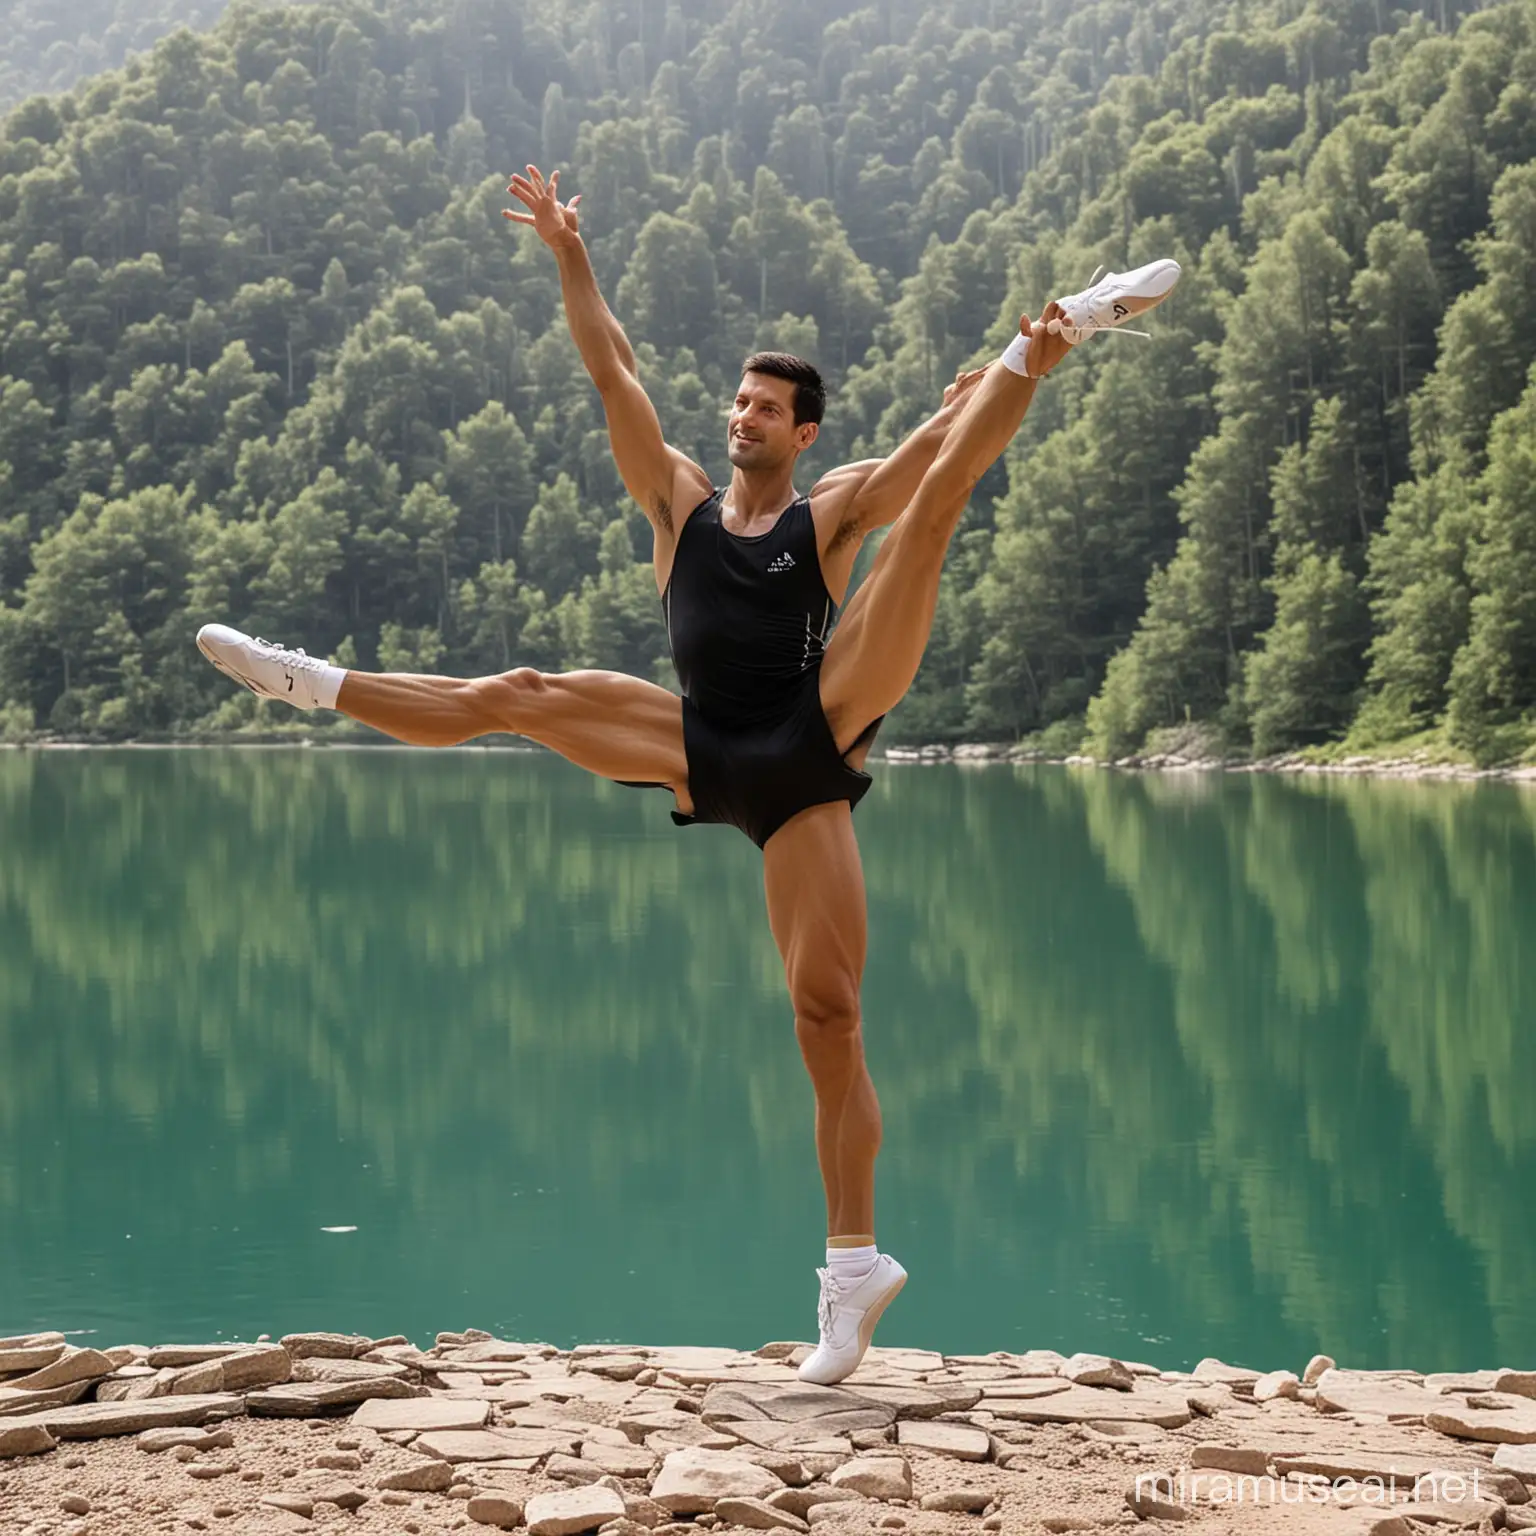 Ballet Performance by Novak Djokovic at Scenic Lakeside